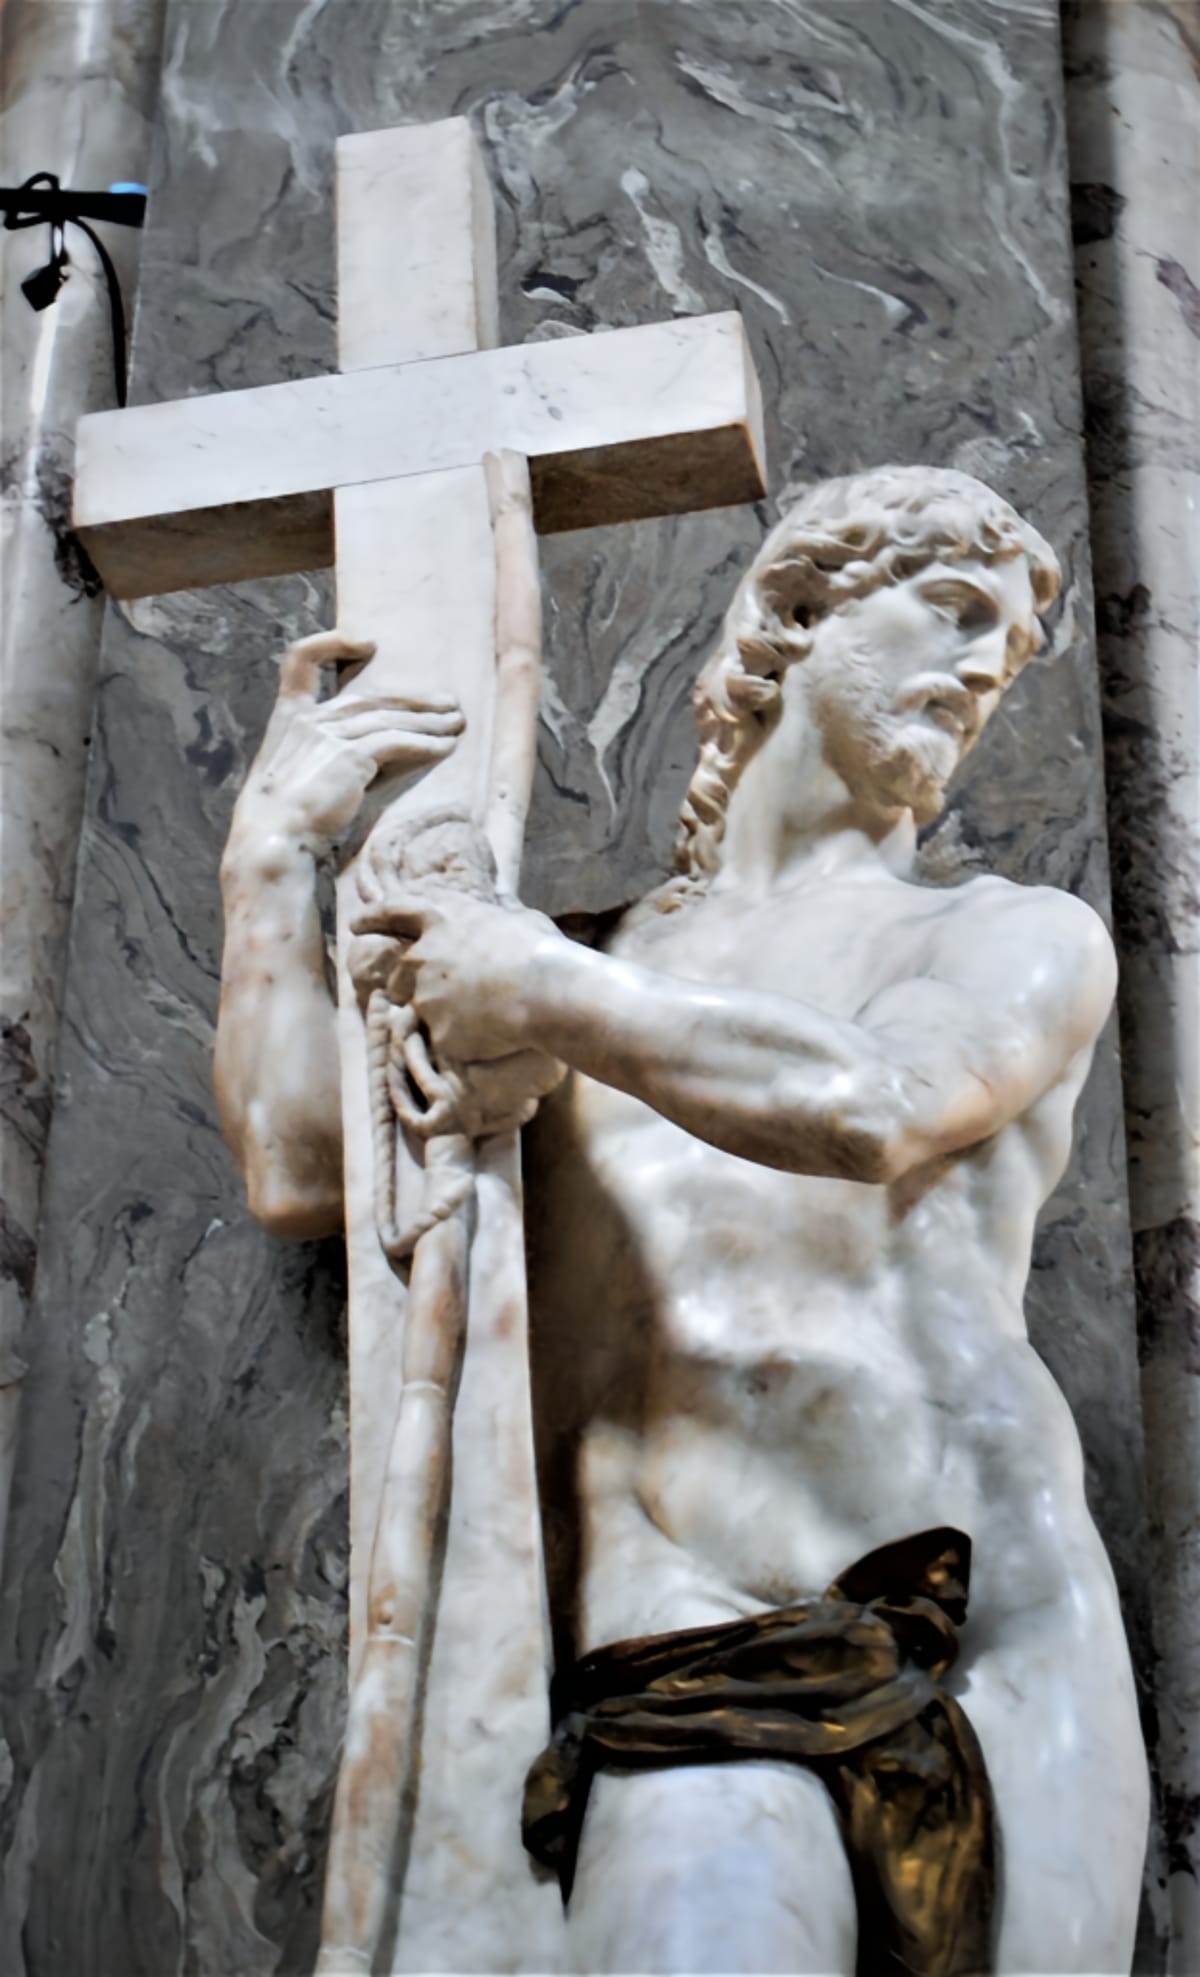 "The Redeemer" Statue (1519-1521) by Michelangelo (Santa Maria sopra Minerva Church in Rome, 2017) Photo by Carlo Raso - Catholic Stock Photo